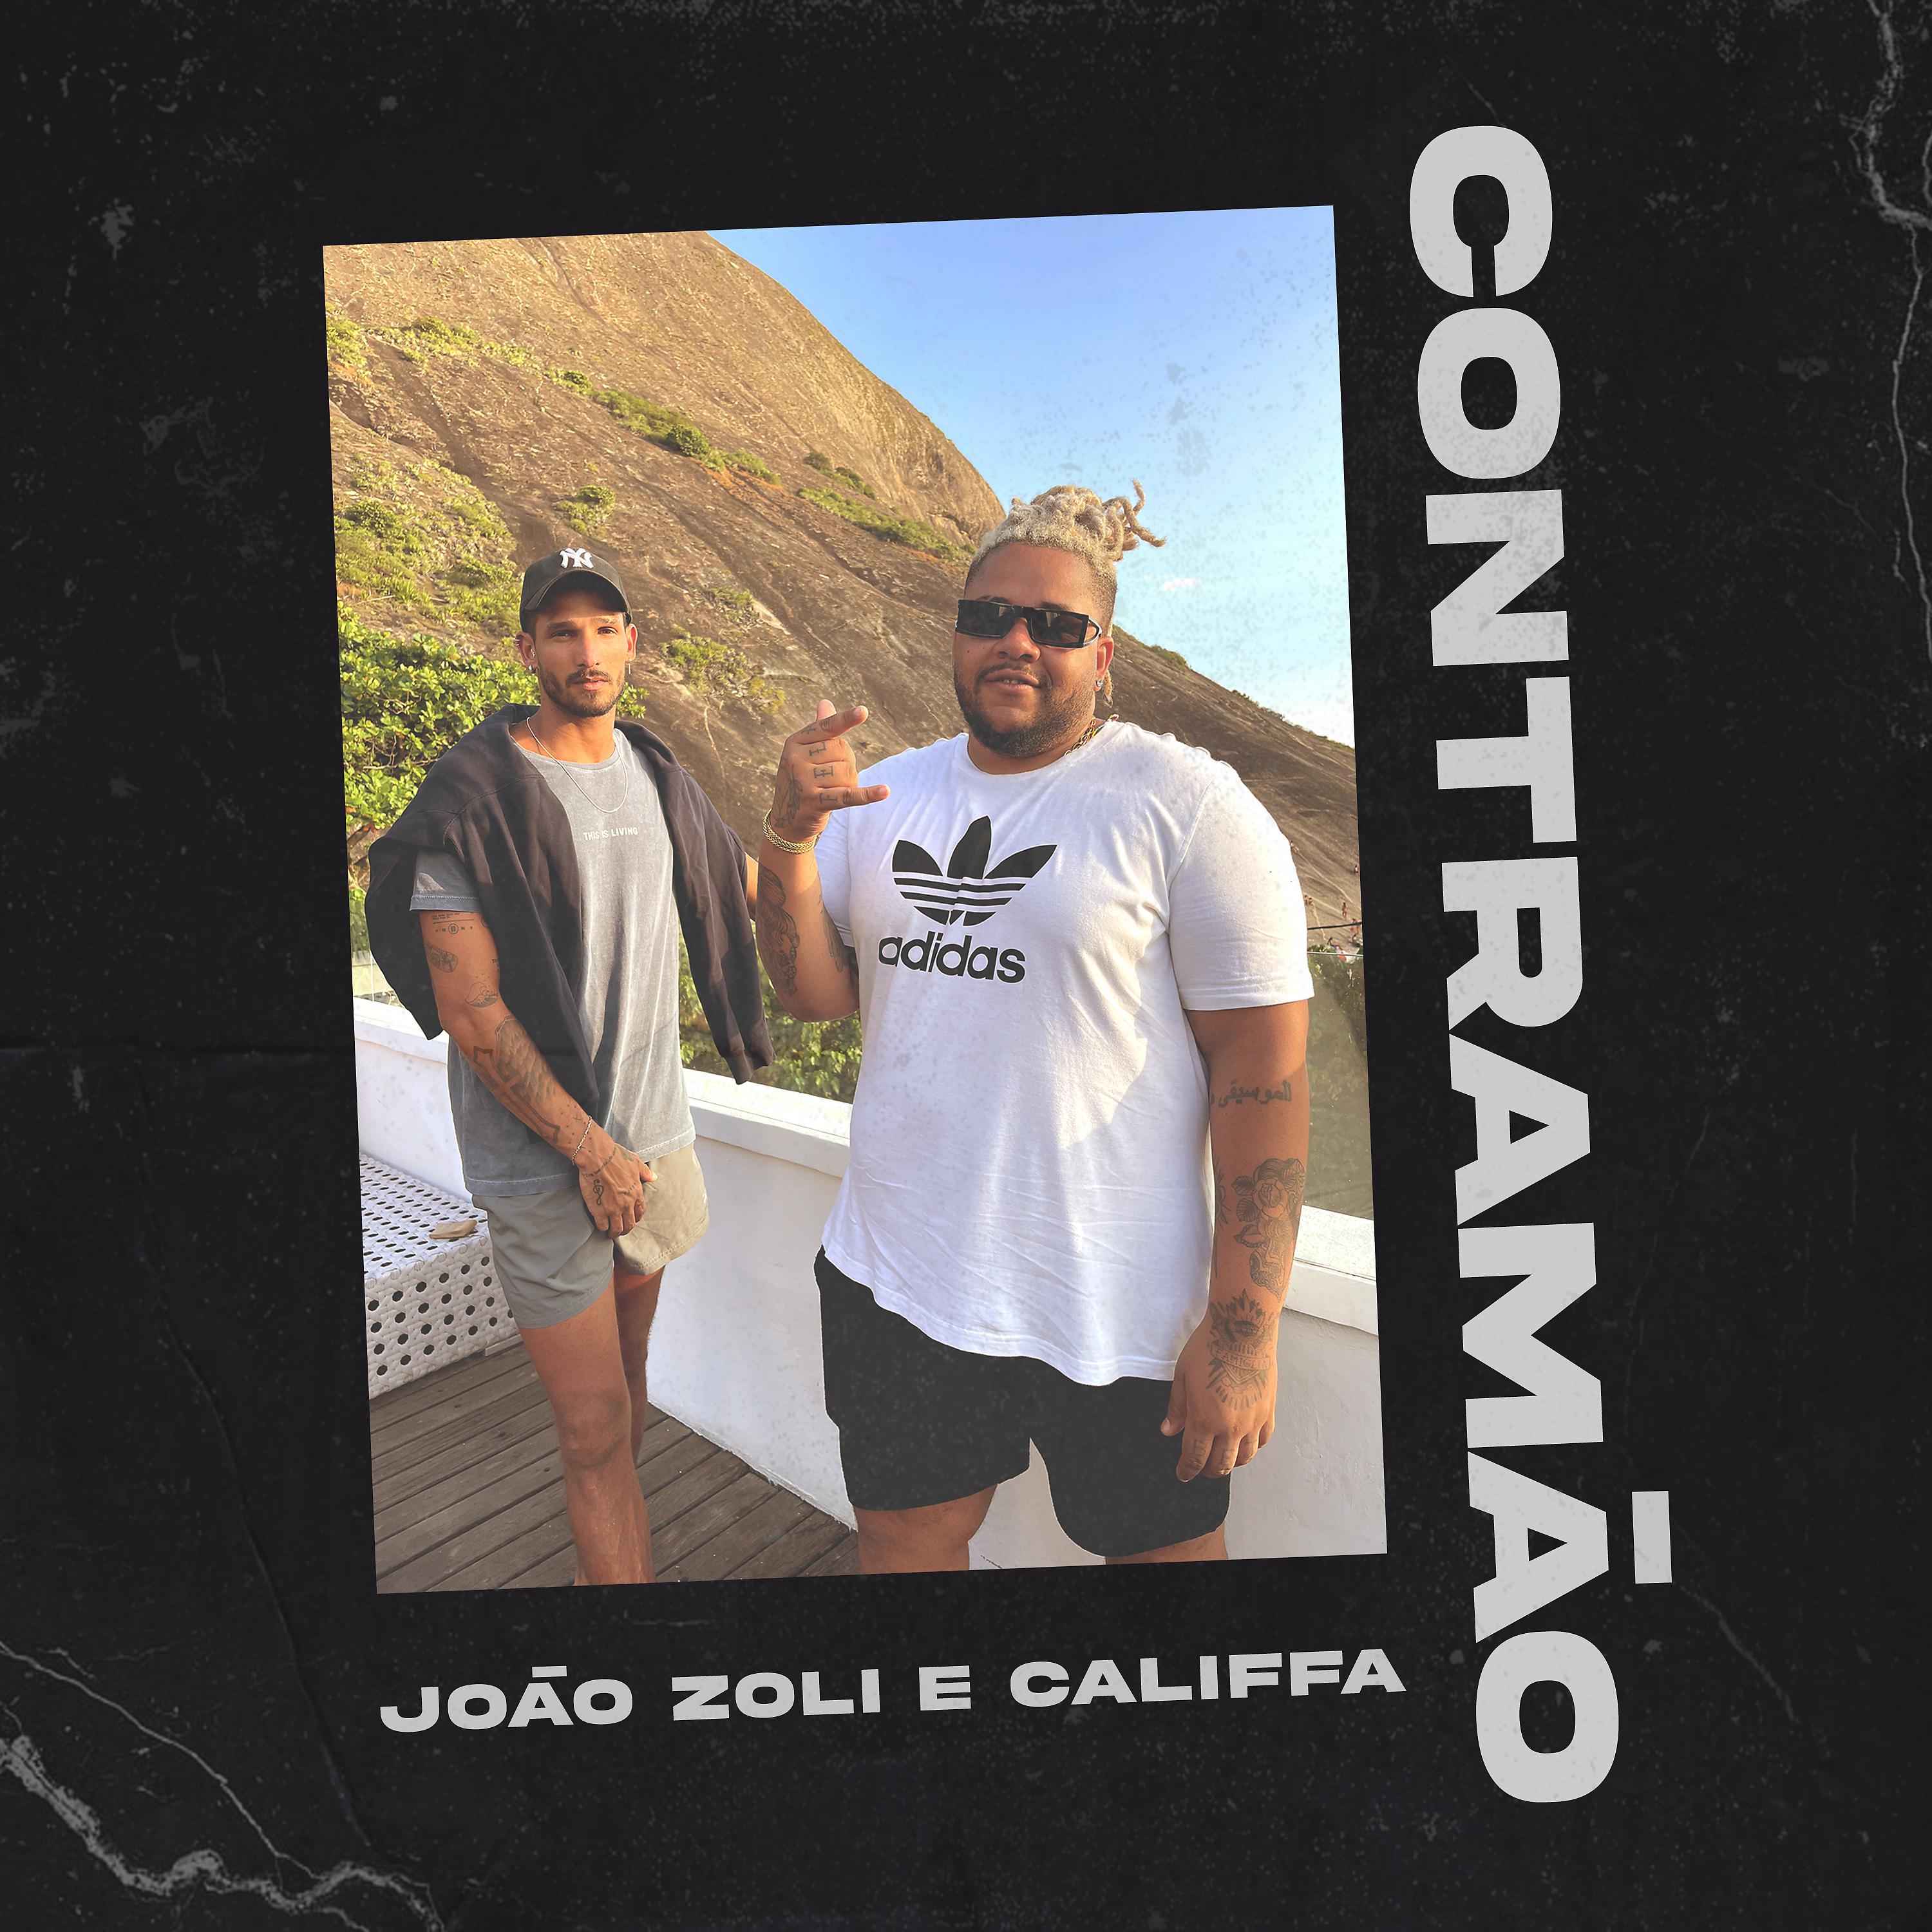 Постер альбома Contramão